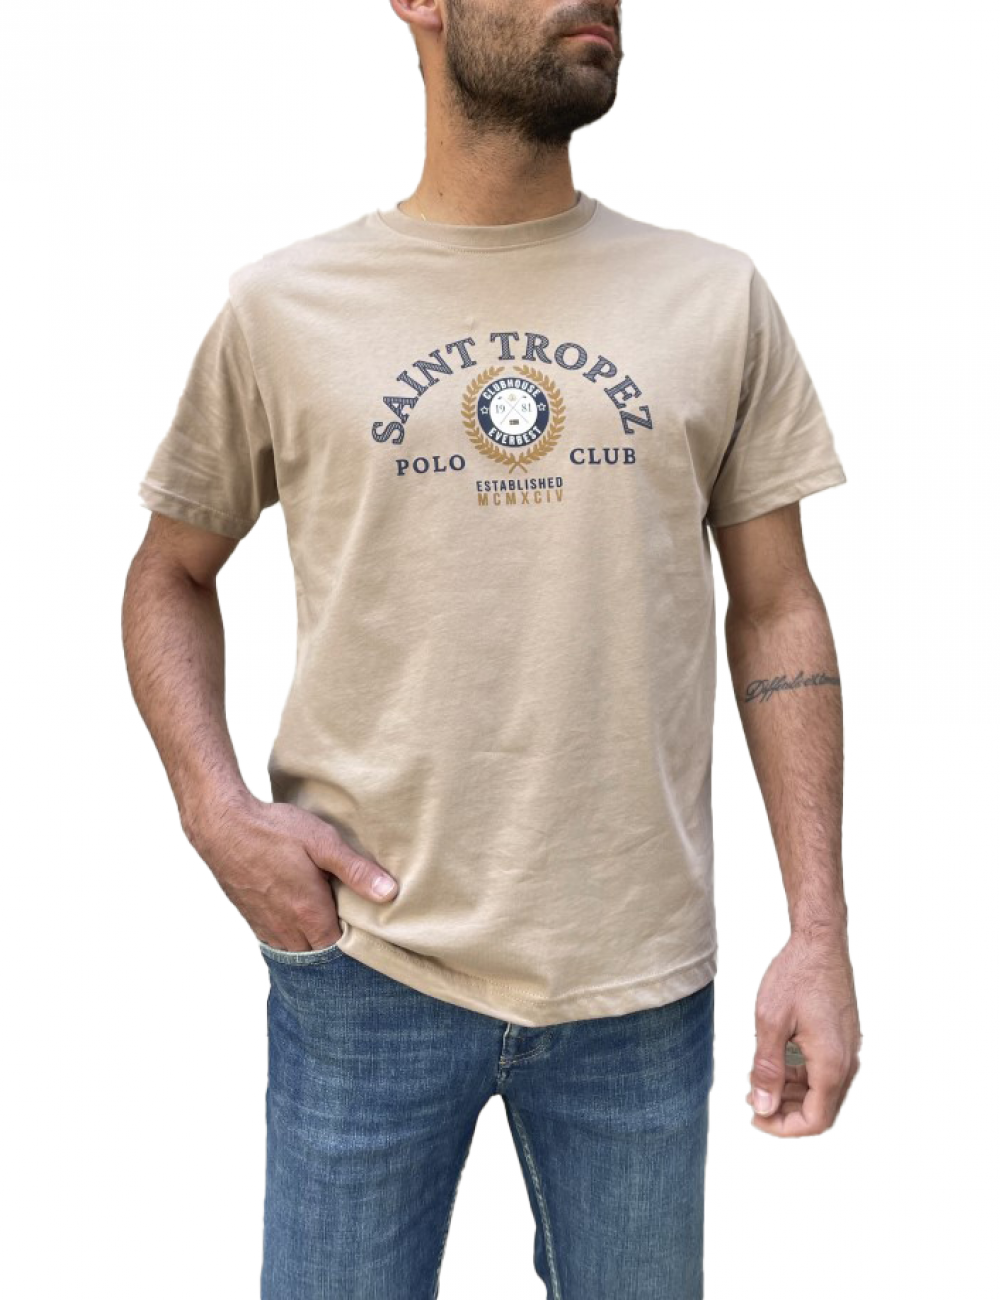 Everbest ανδρικό μπεζ Tshirt με τύπωμα 242808B